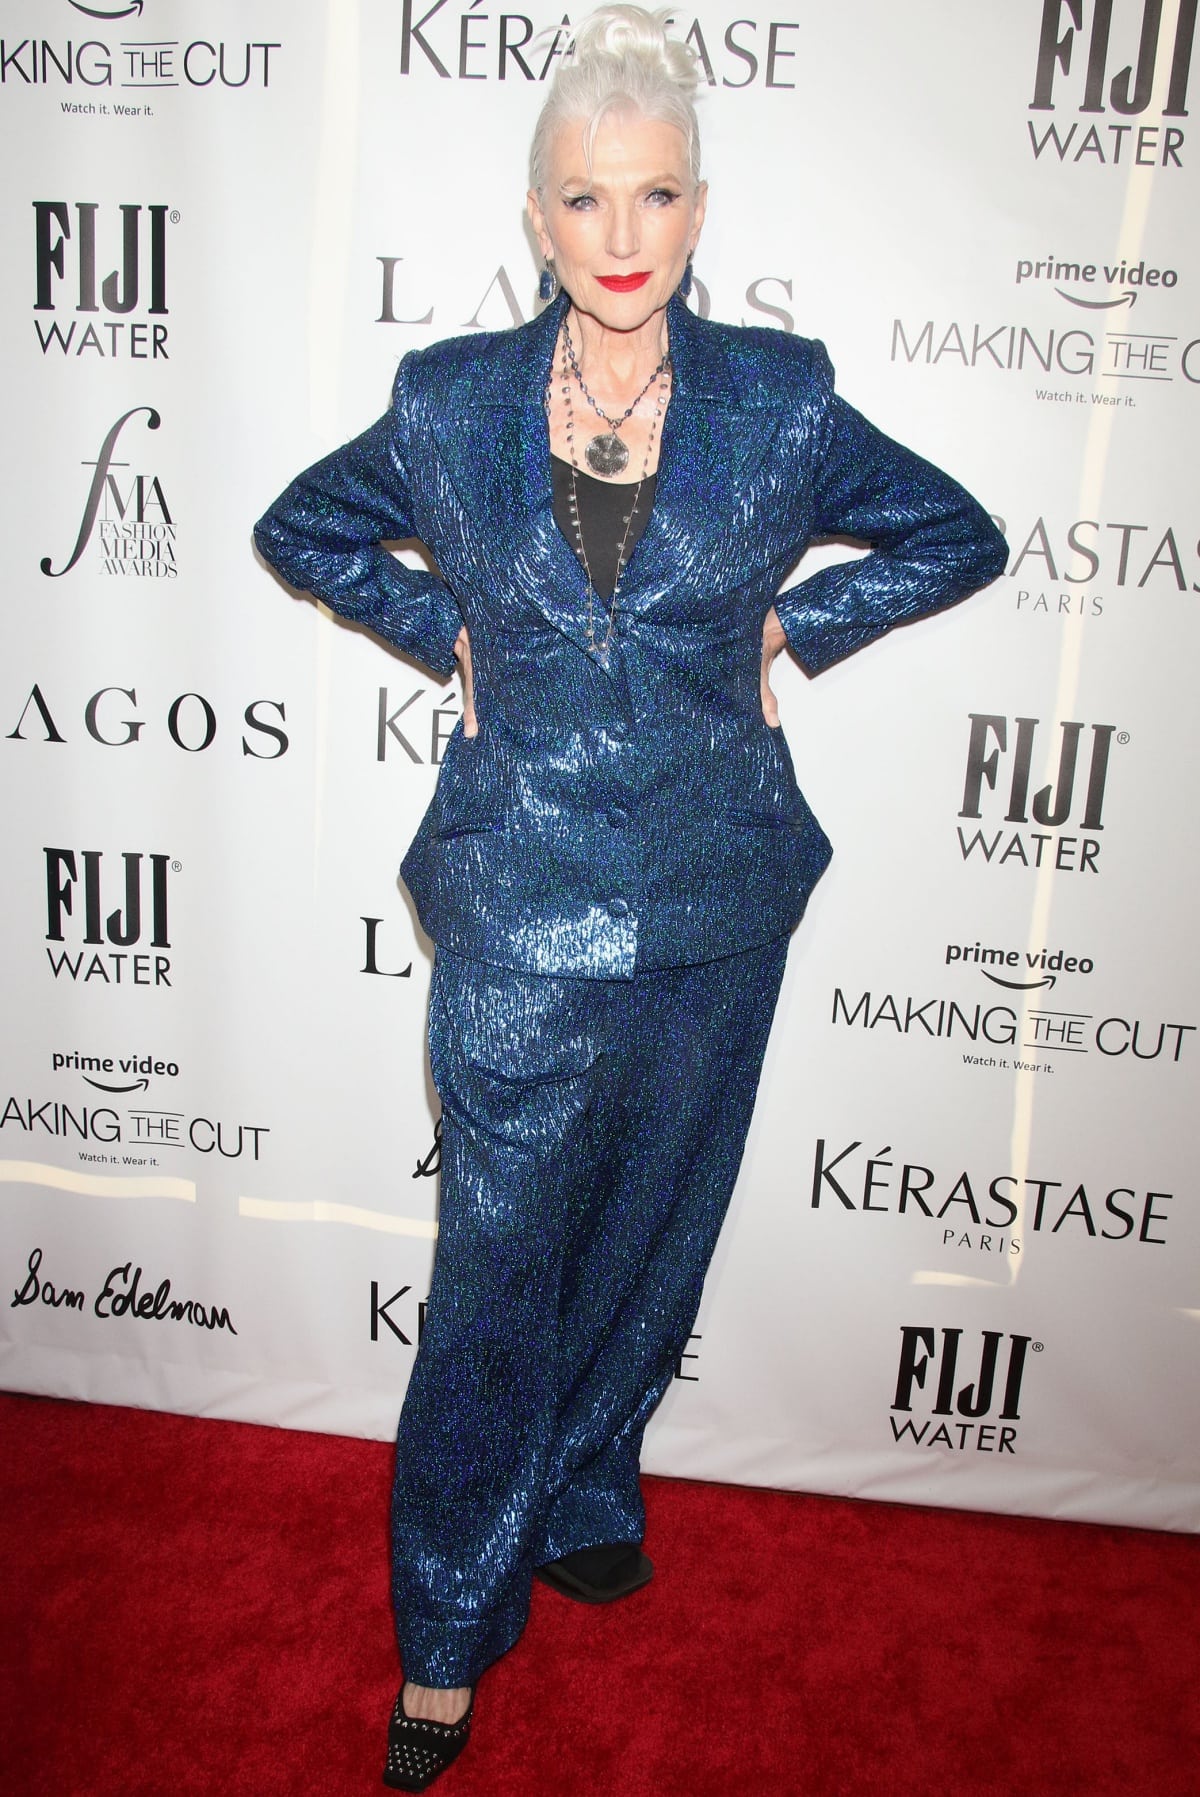 Maye Musk wearing a blue embellished suit with embellished heels